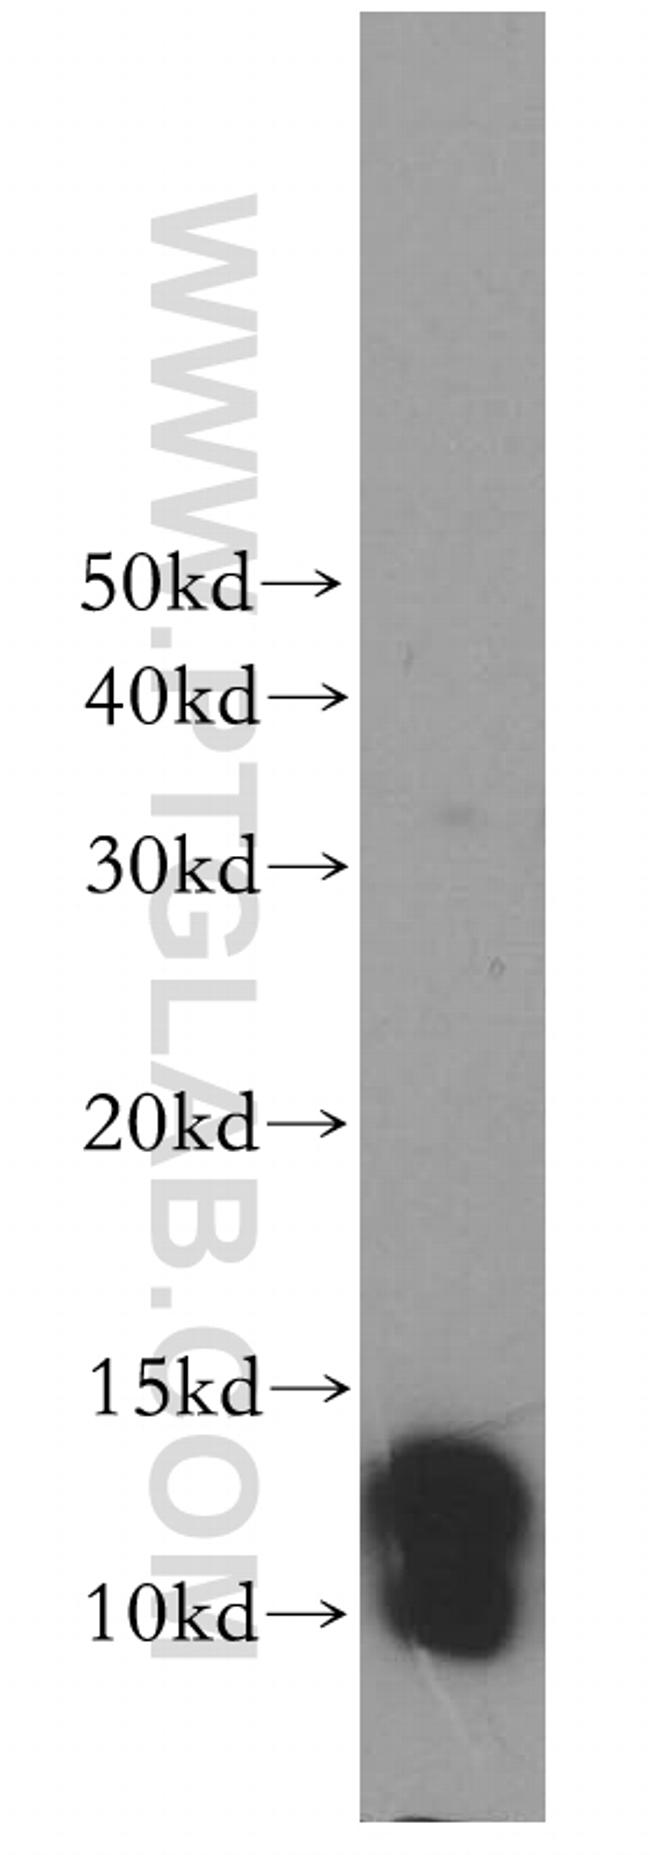 S100A5 Antibody in Western Blot (WB)